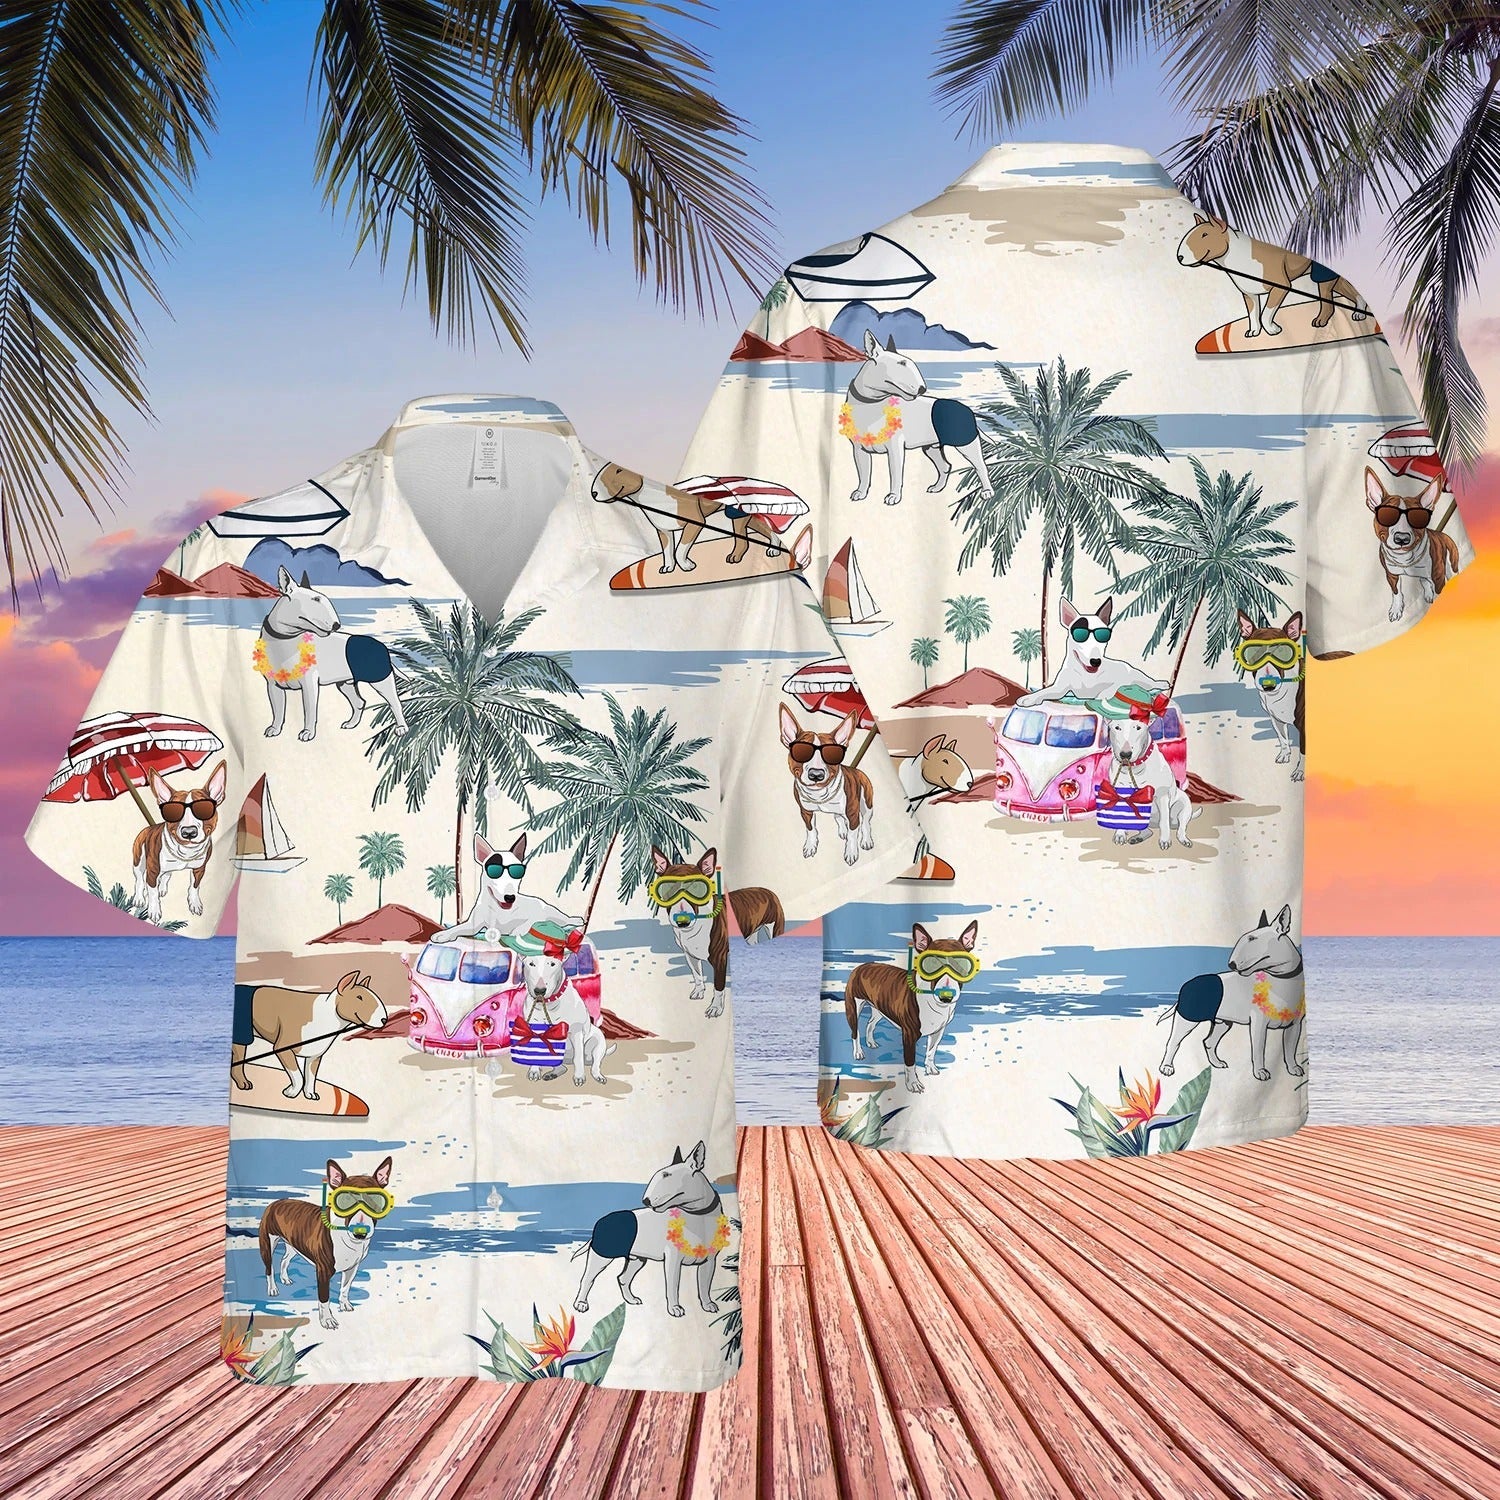 Bulldog/ Boston Terrier Summer Beach Hawaiian Shirt/ Dog Breed 3D Print On Hawaiian Aloha Shirt For Men And Woman